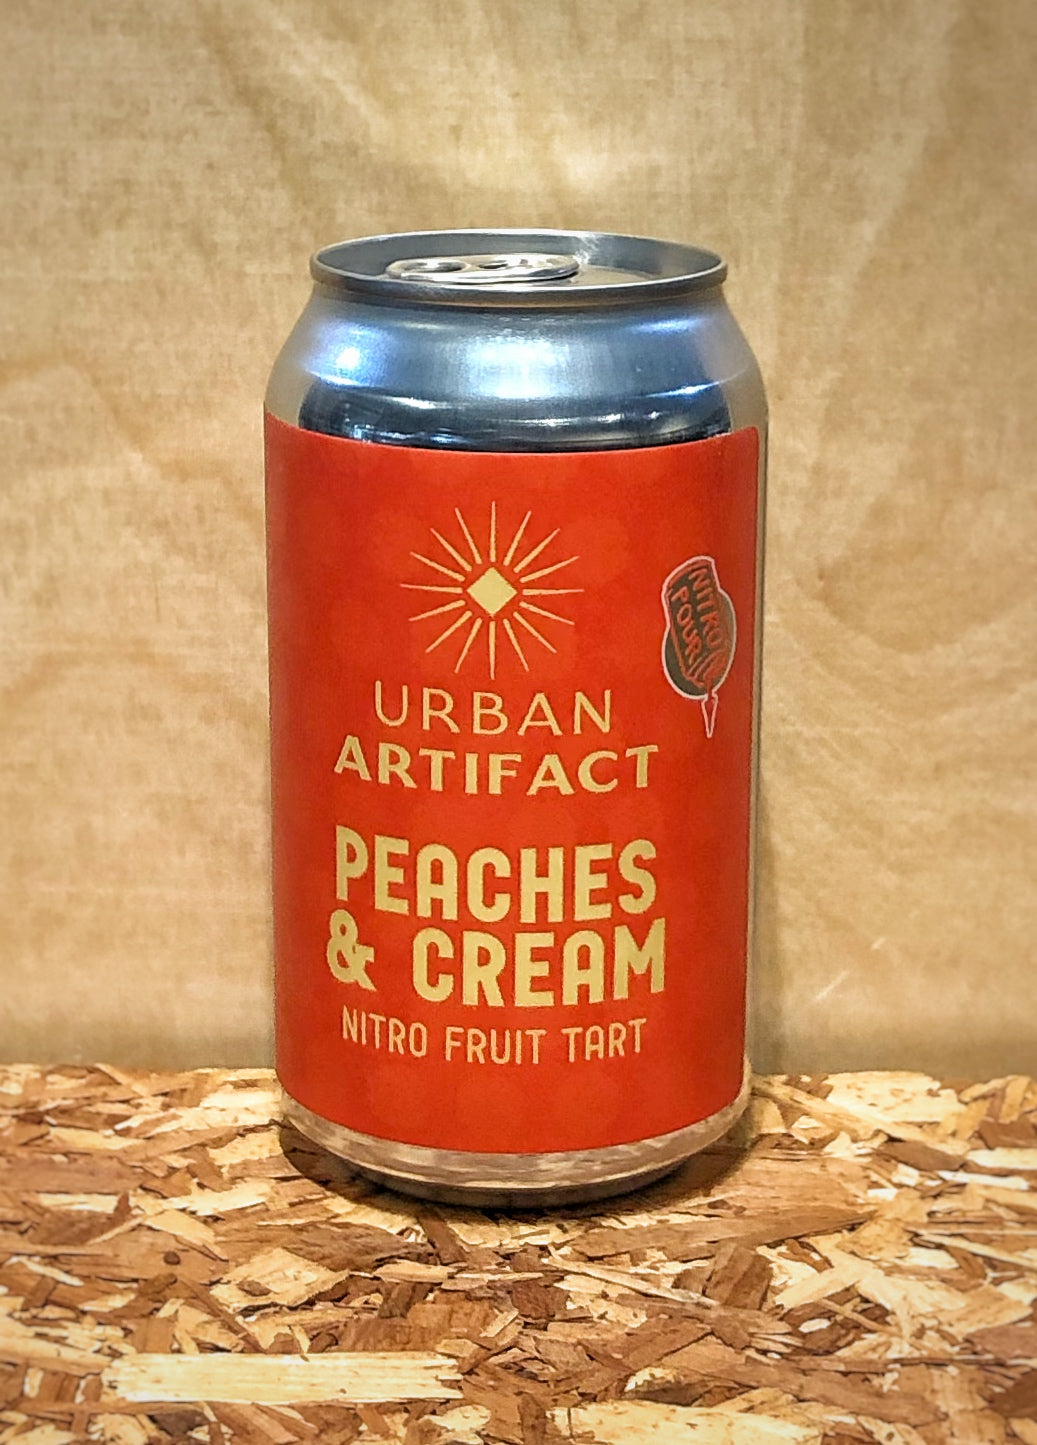 Urban Artifact 'Peaches & Cream' Nitro Fruit Tart with Peaches and Vanilla (Cincinnati, OH)